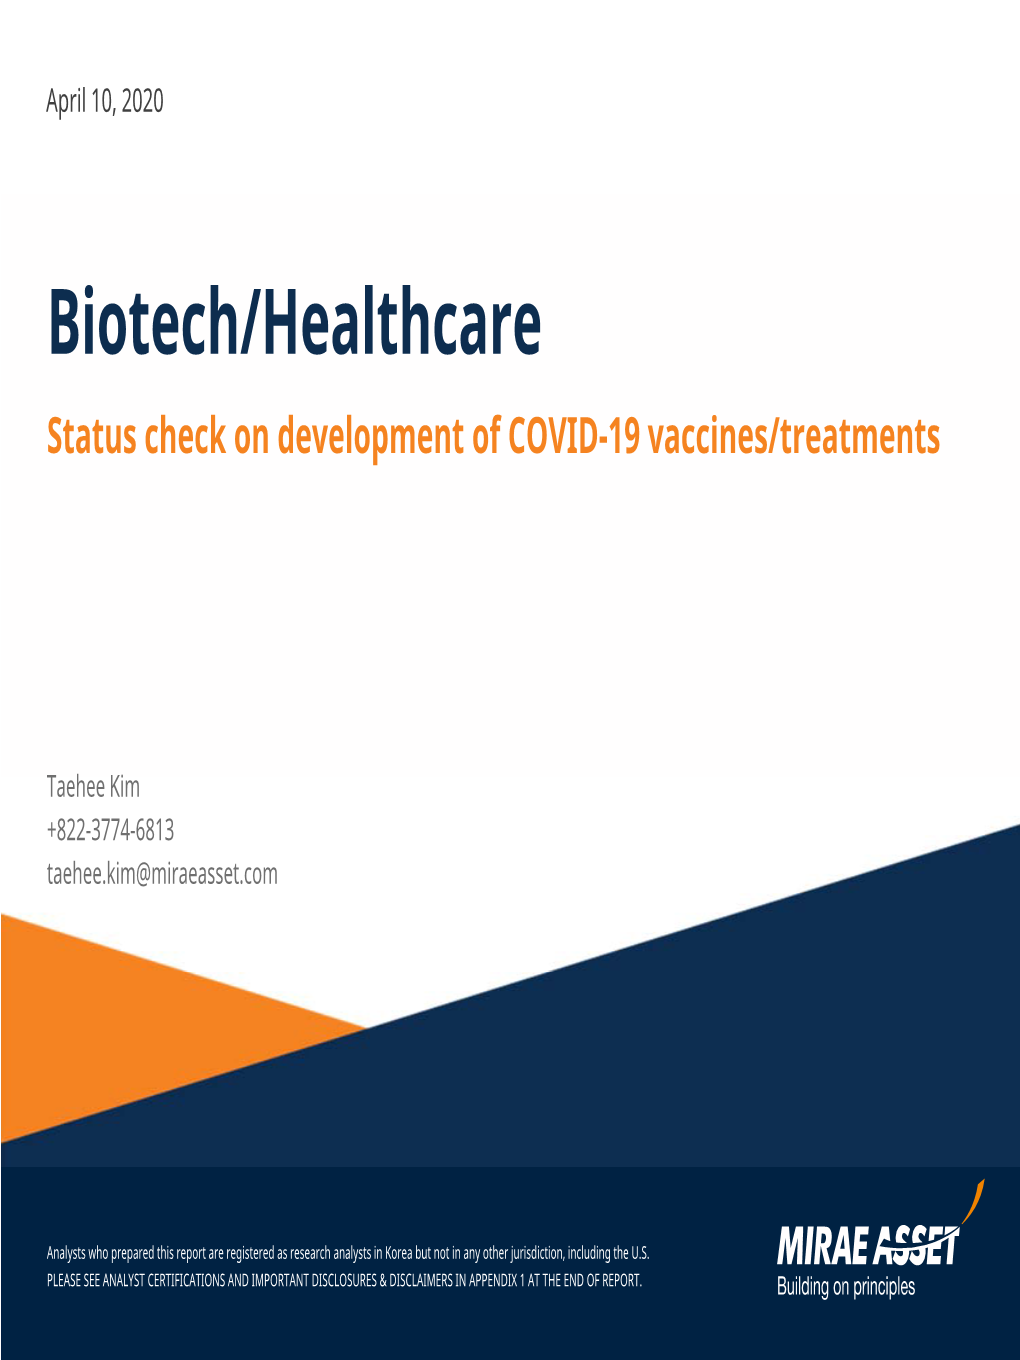 Biotech/Healthcare Status Check on Development of COVID-19 Vaccines/Treatments